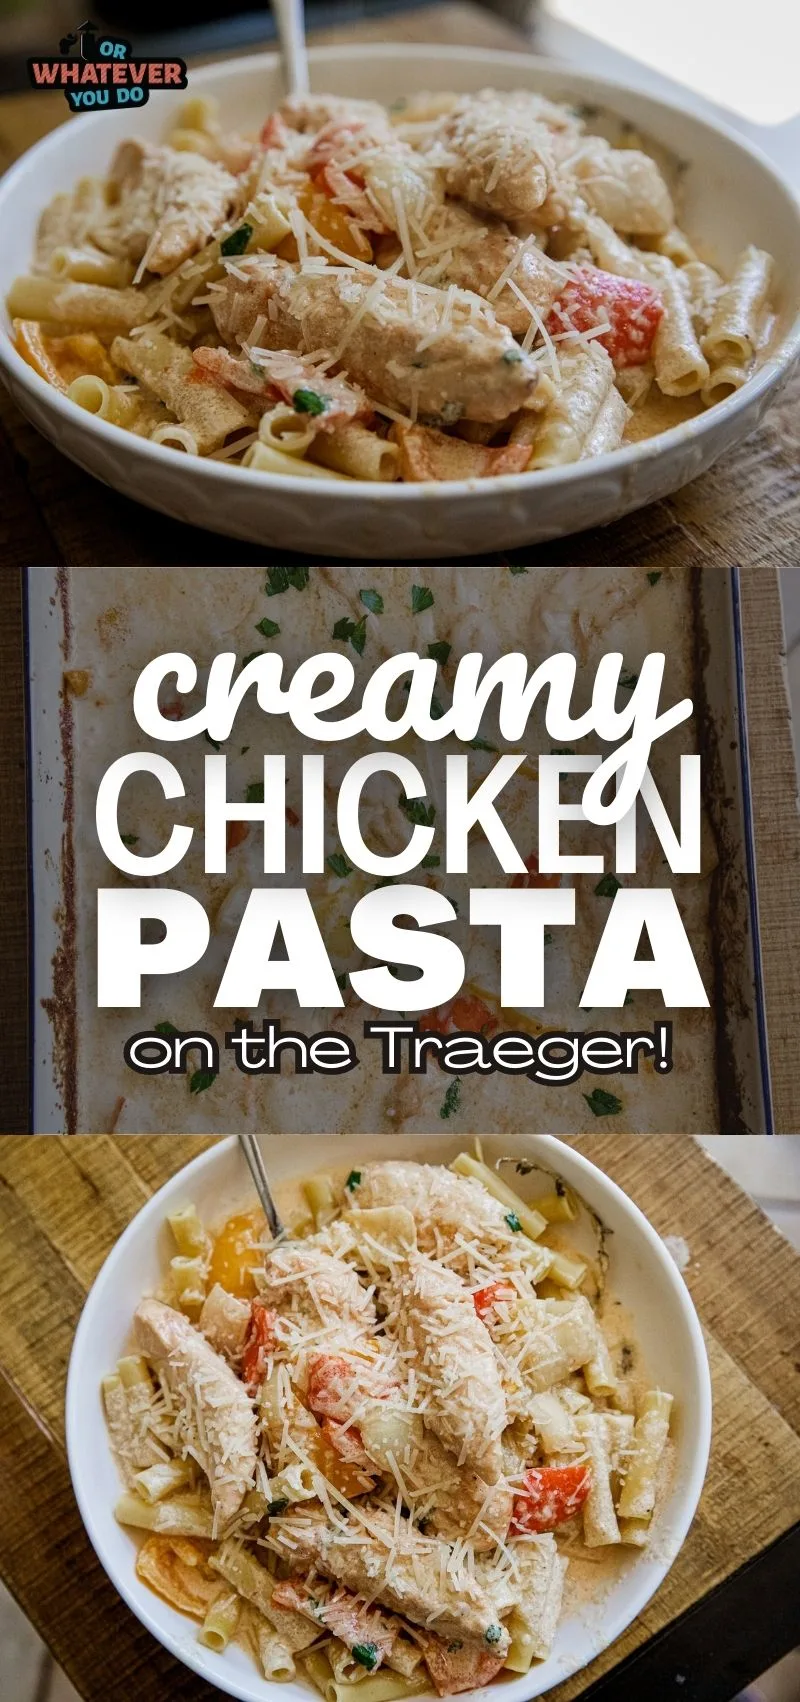 Traeger Creamy Chicken Pasta